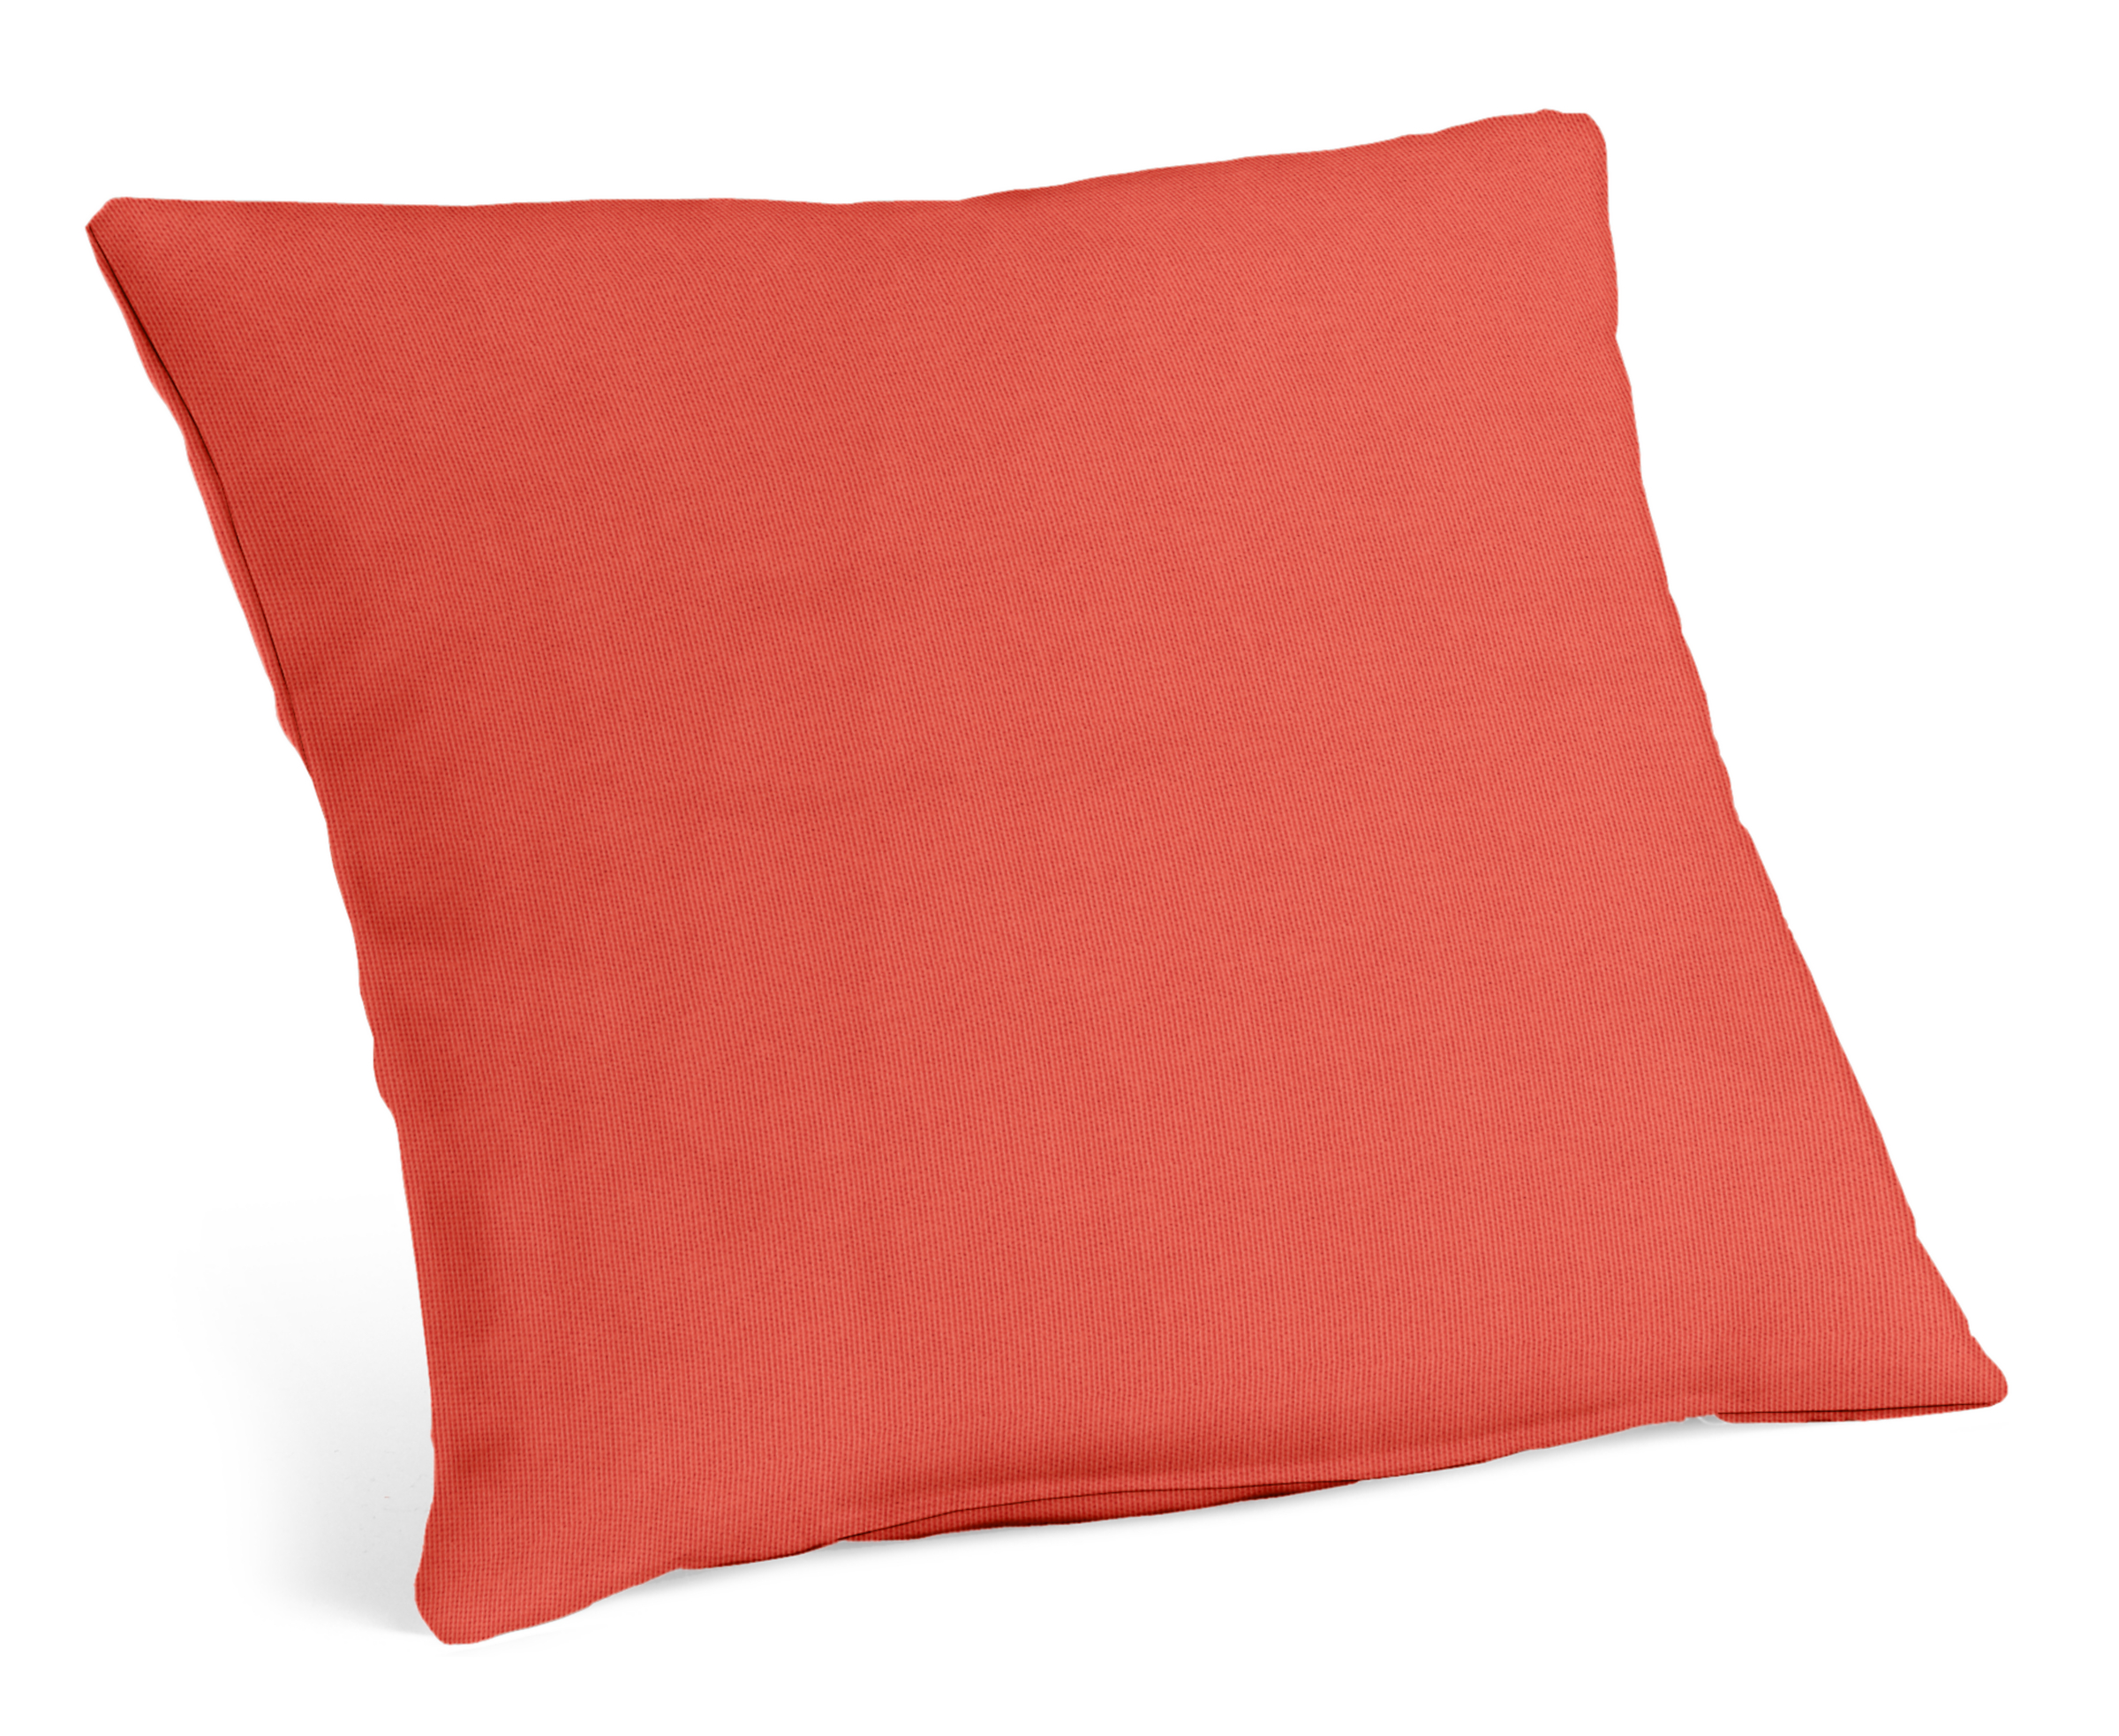 Hue 20w 20h Outdoor Pillow in Sunbrella Canvas Orange